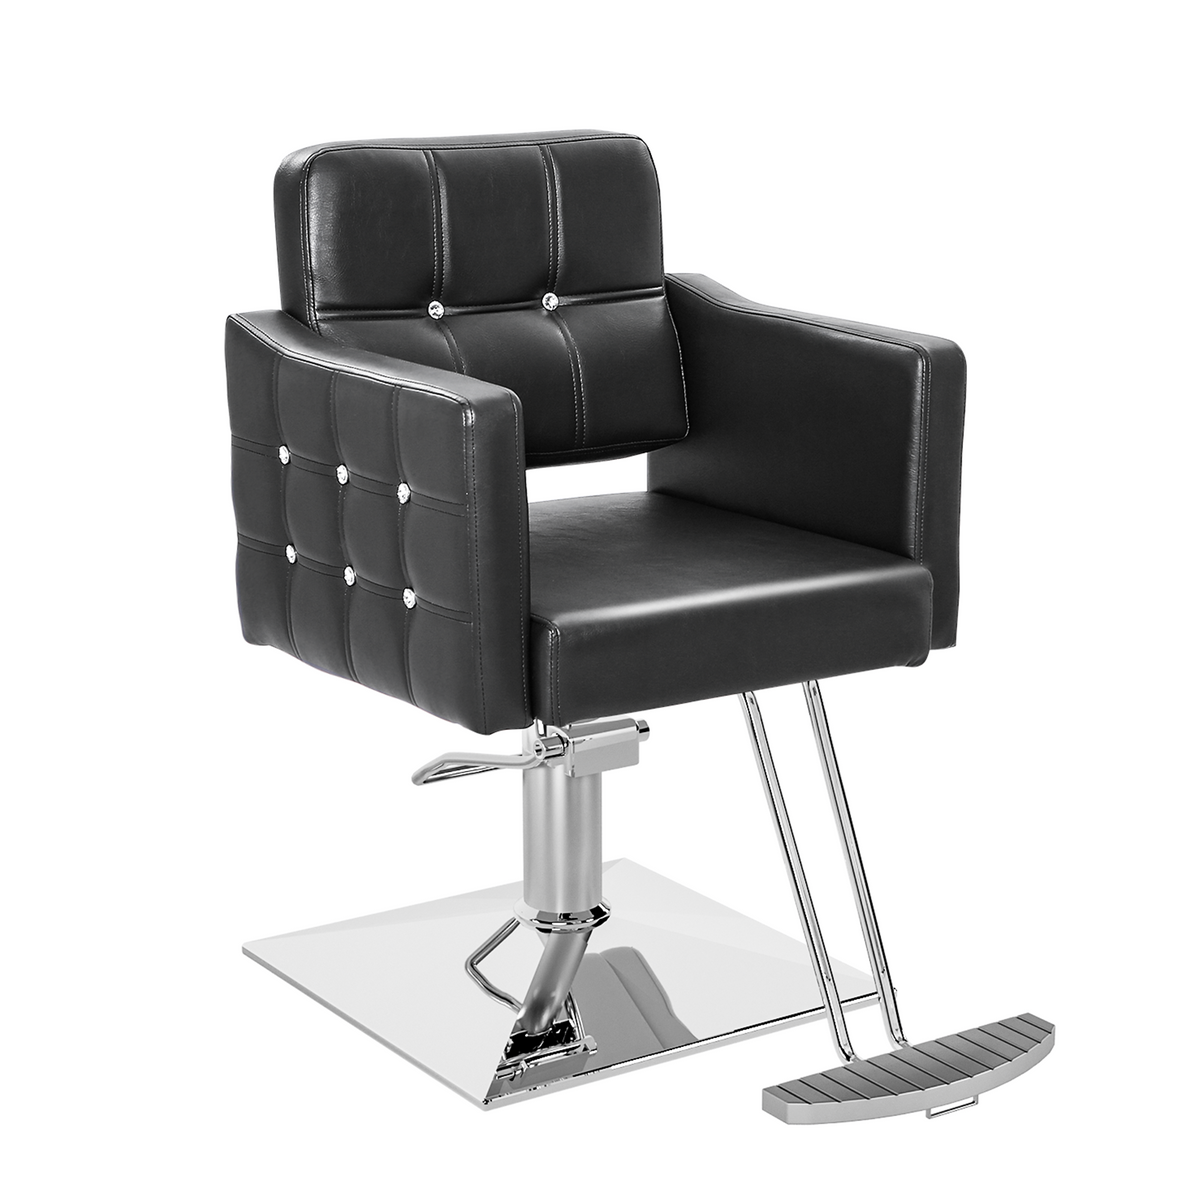 OmySalon Hair Salon Chair Hydraulic Barber Chair for Home Barbershop